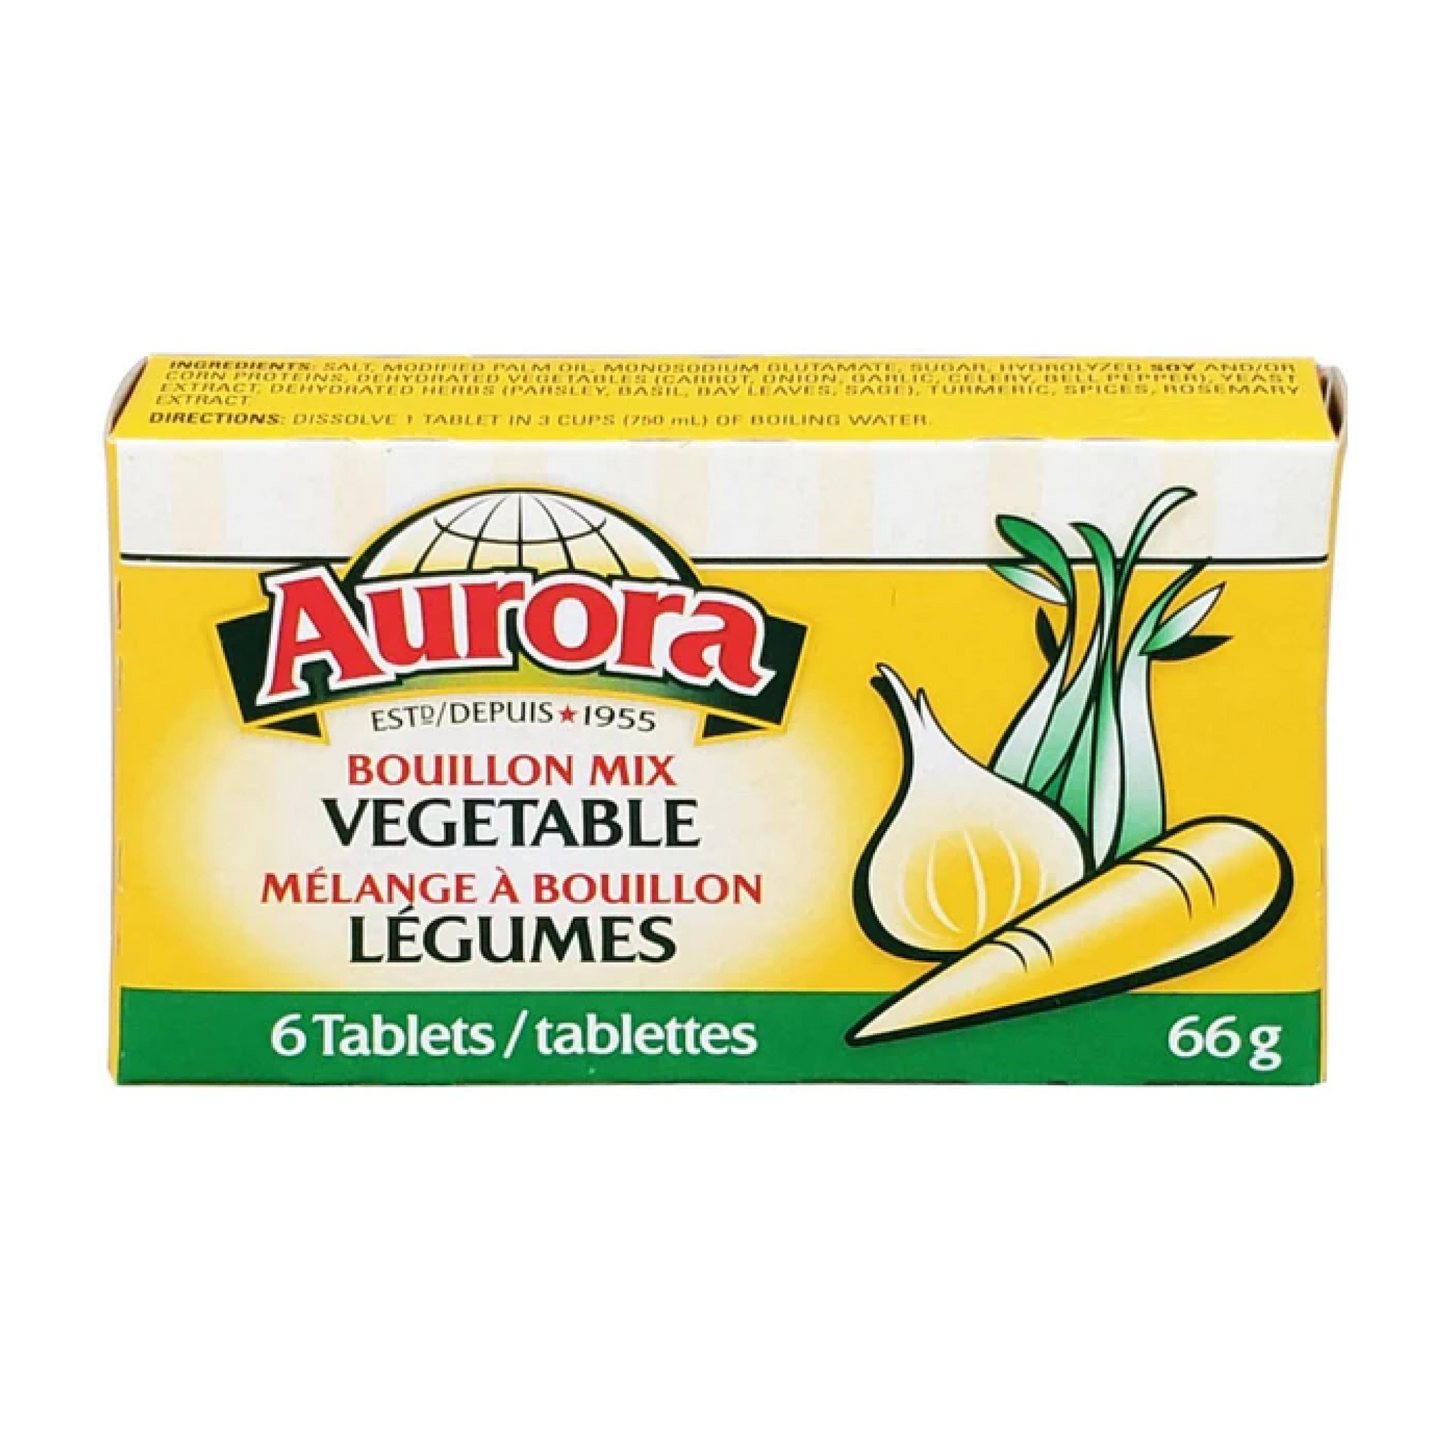 Aurora Bouillon Mix Vegetable 66g